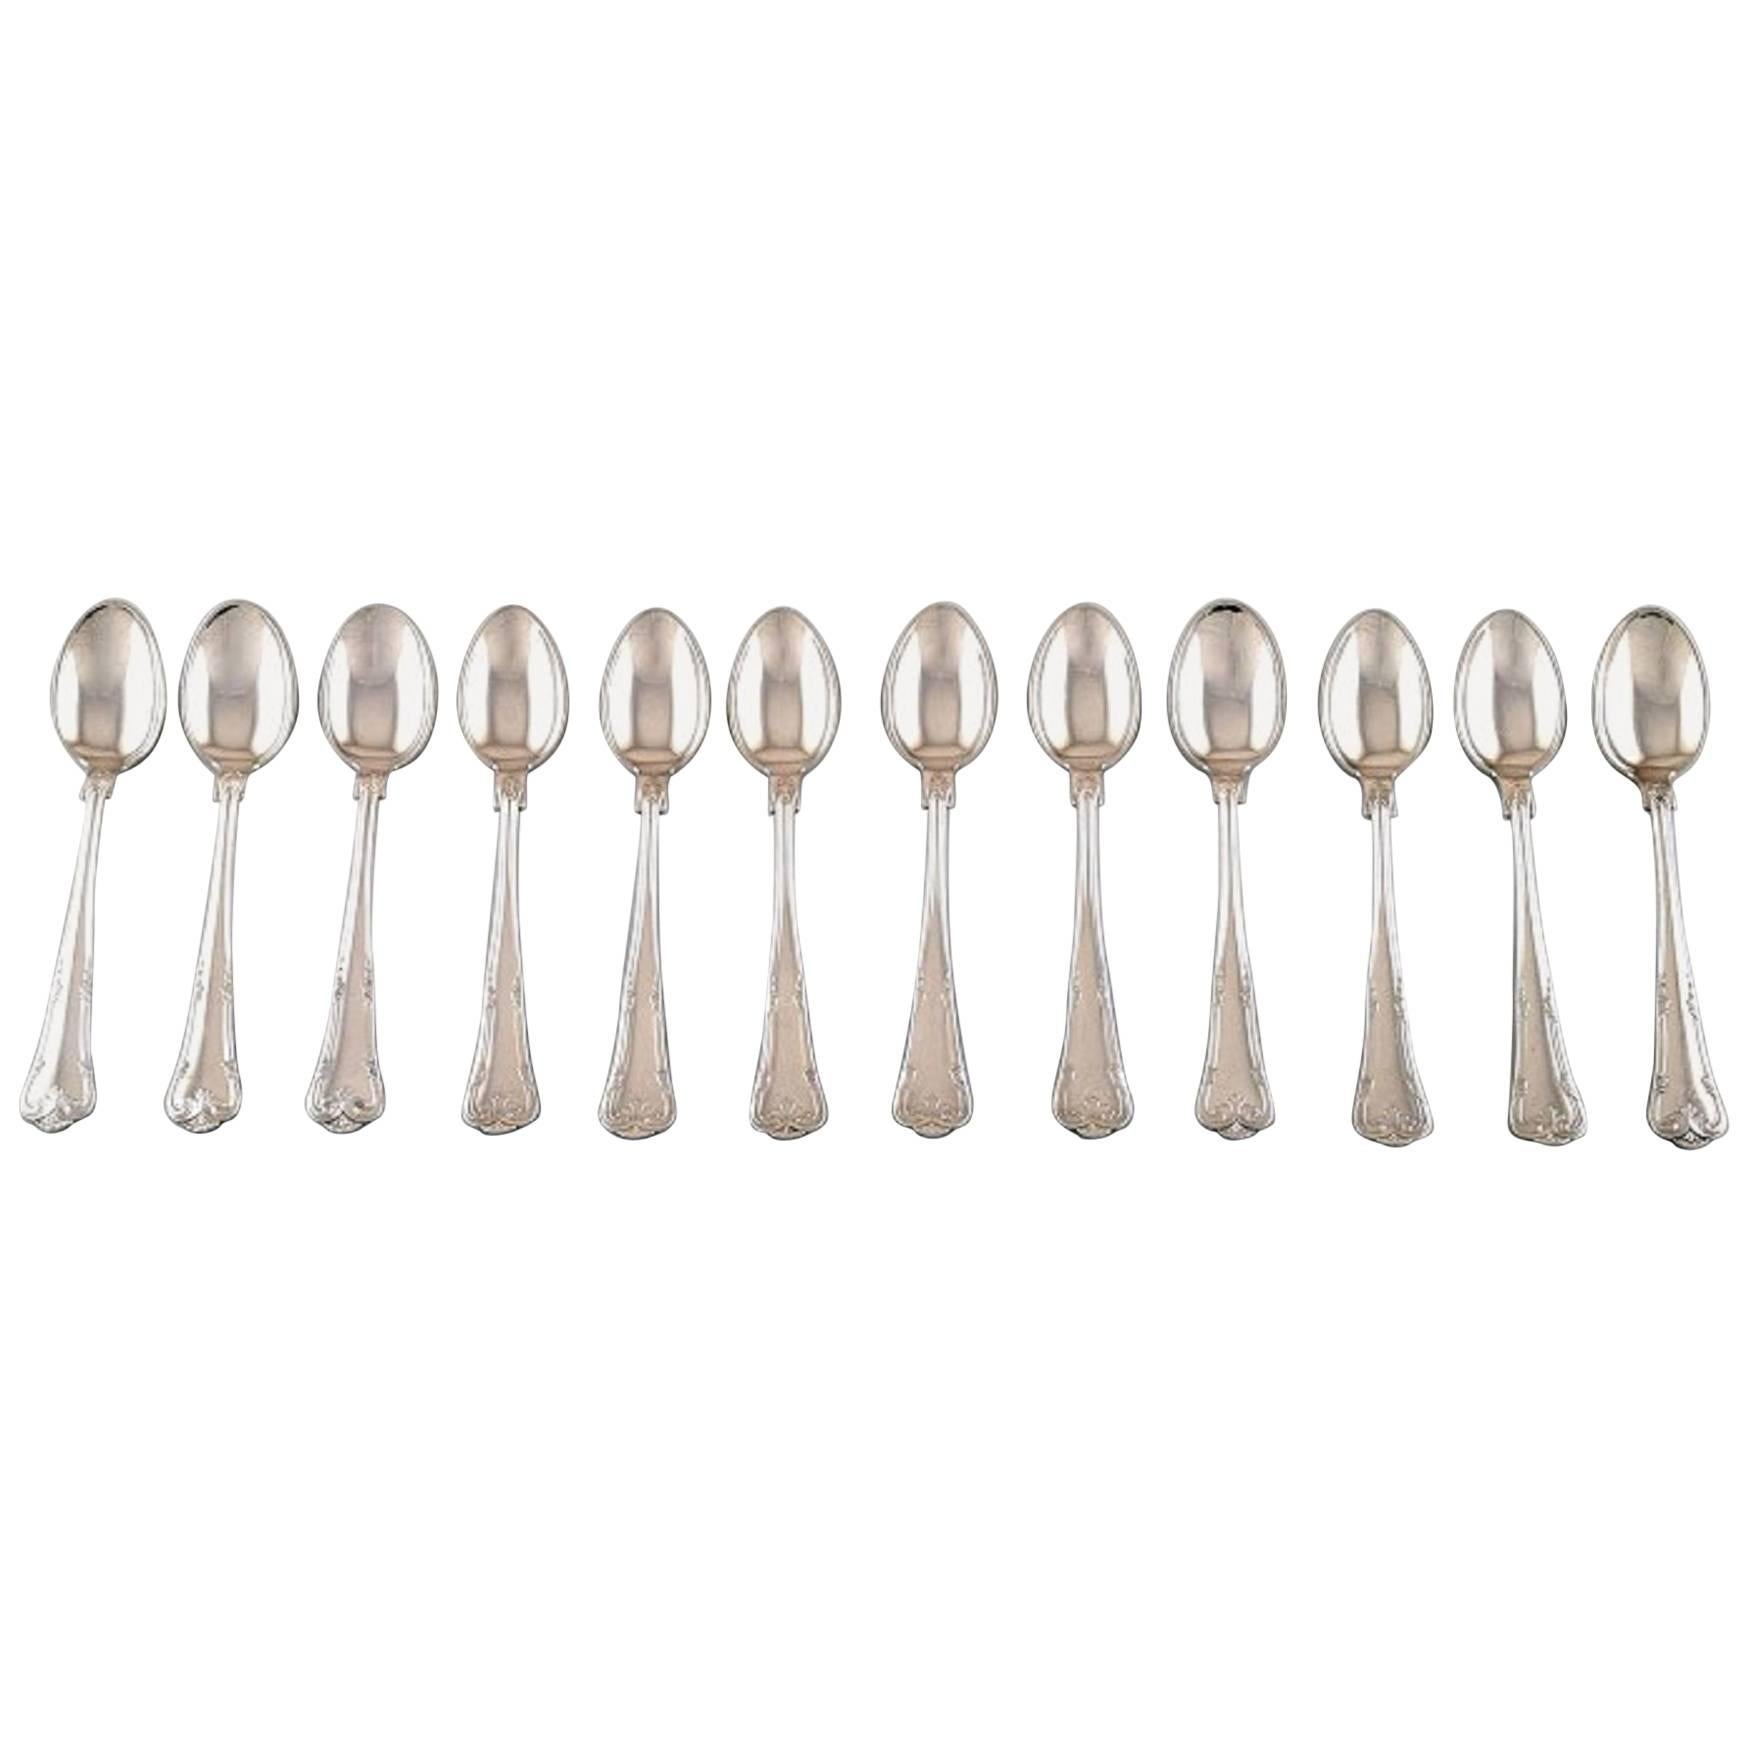 12 Tea Spoons, Cohr, Denmark, "Herregaard" Silver Cutlery For Sale